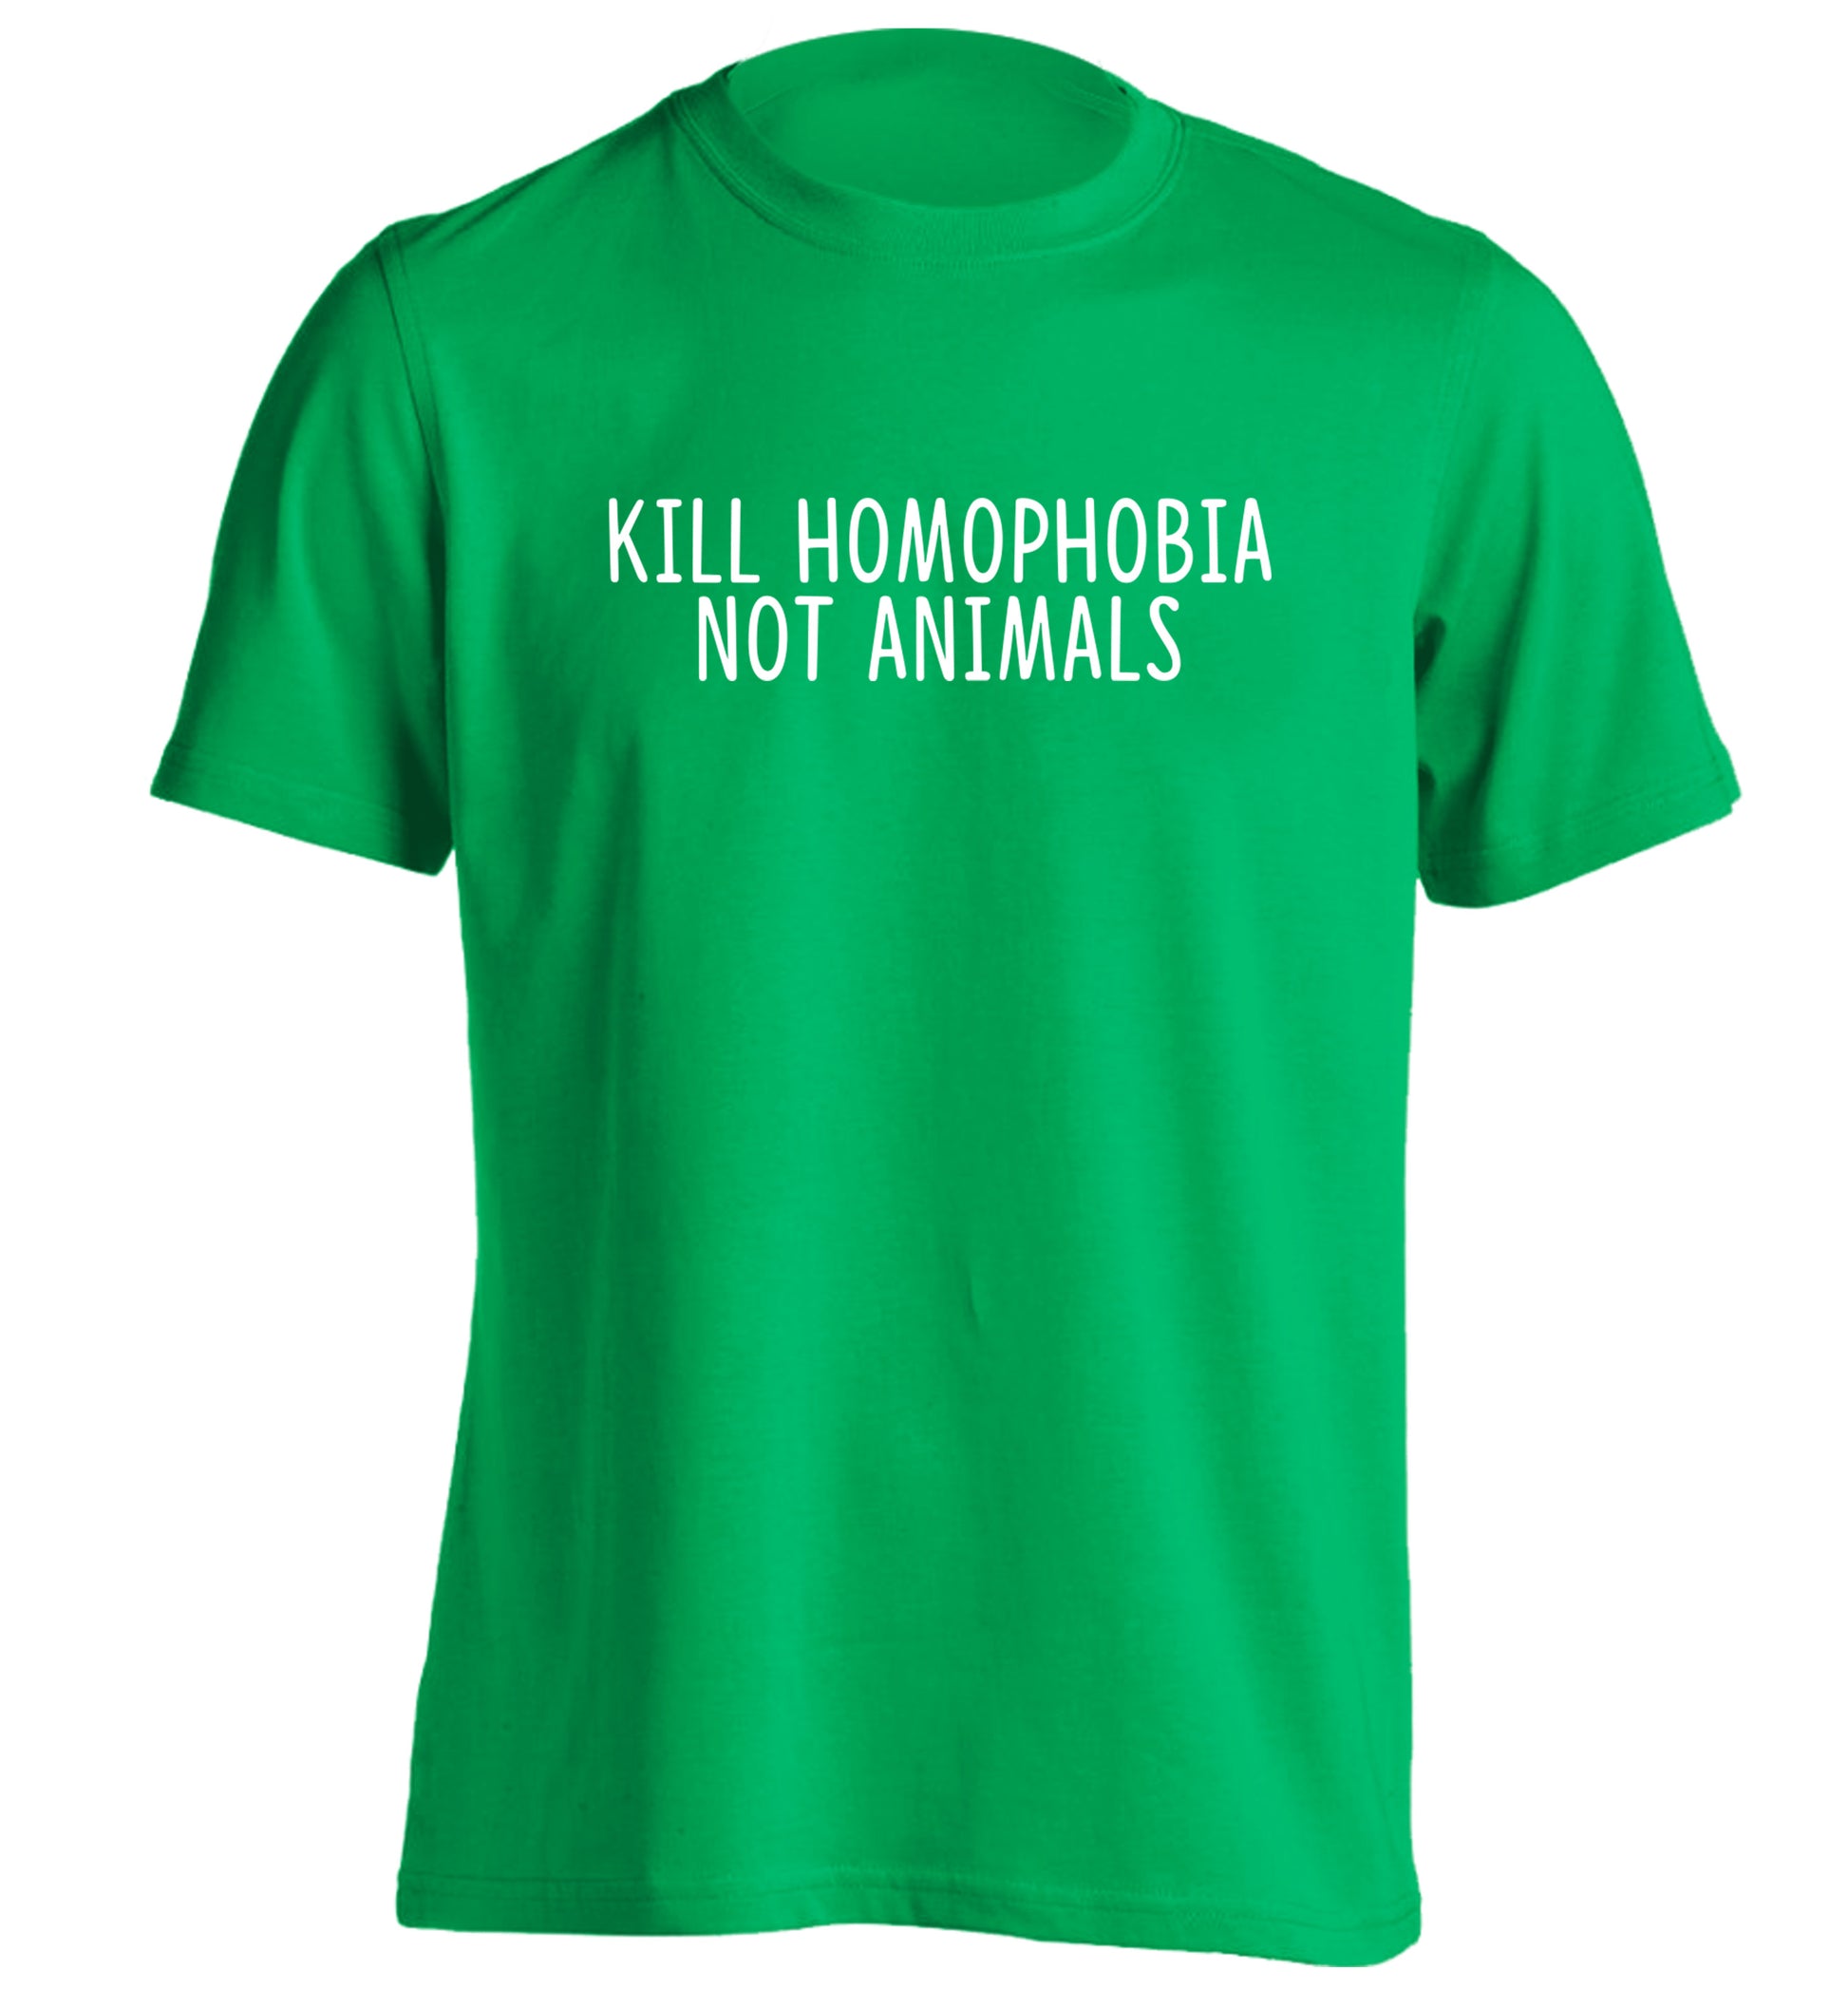 Kill Homophobia Not Animals adults unisex green Tshirt 2XL